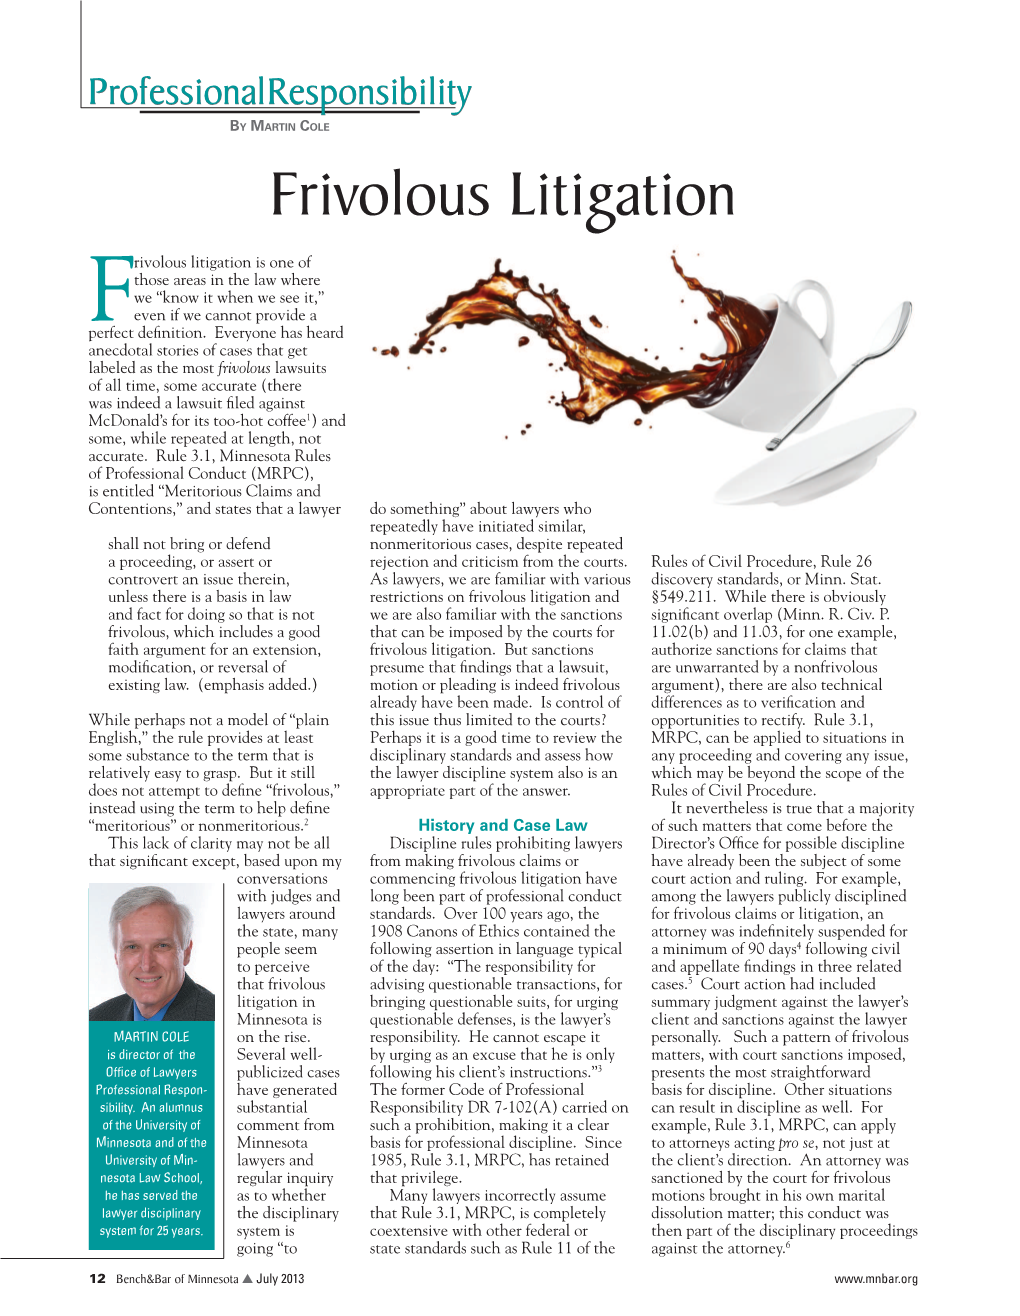 Frivolous Litigation